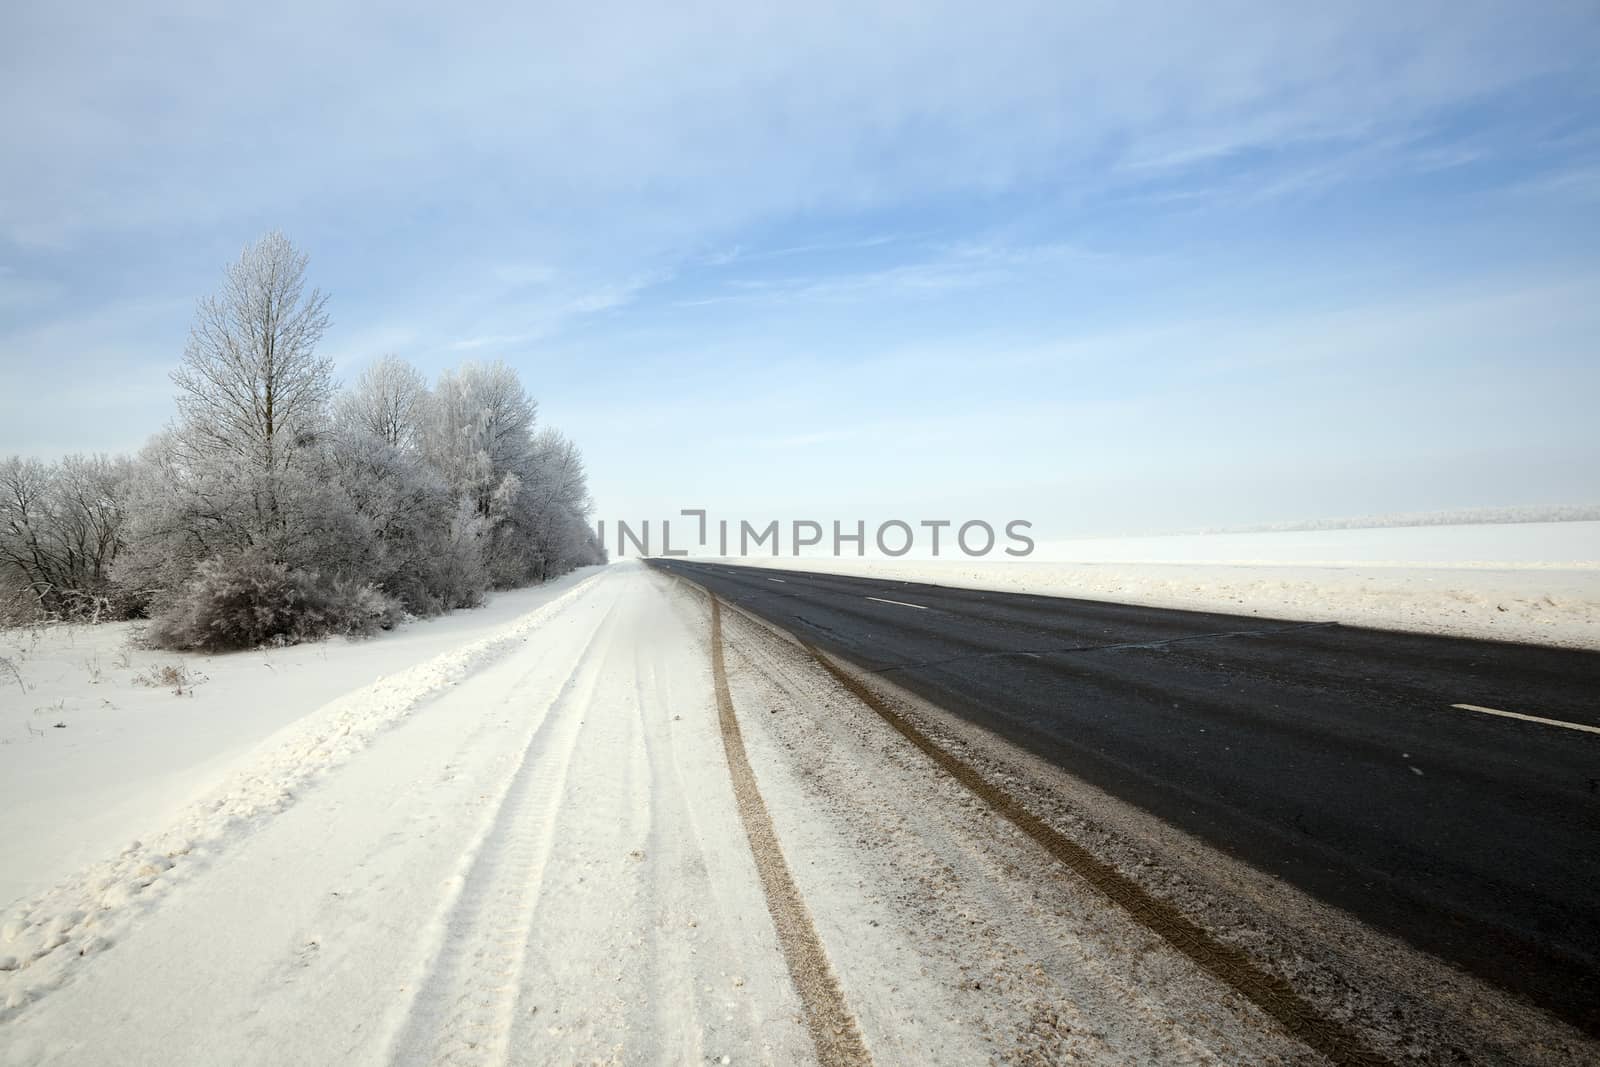   the small asphalted road. winter season